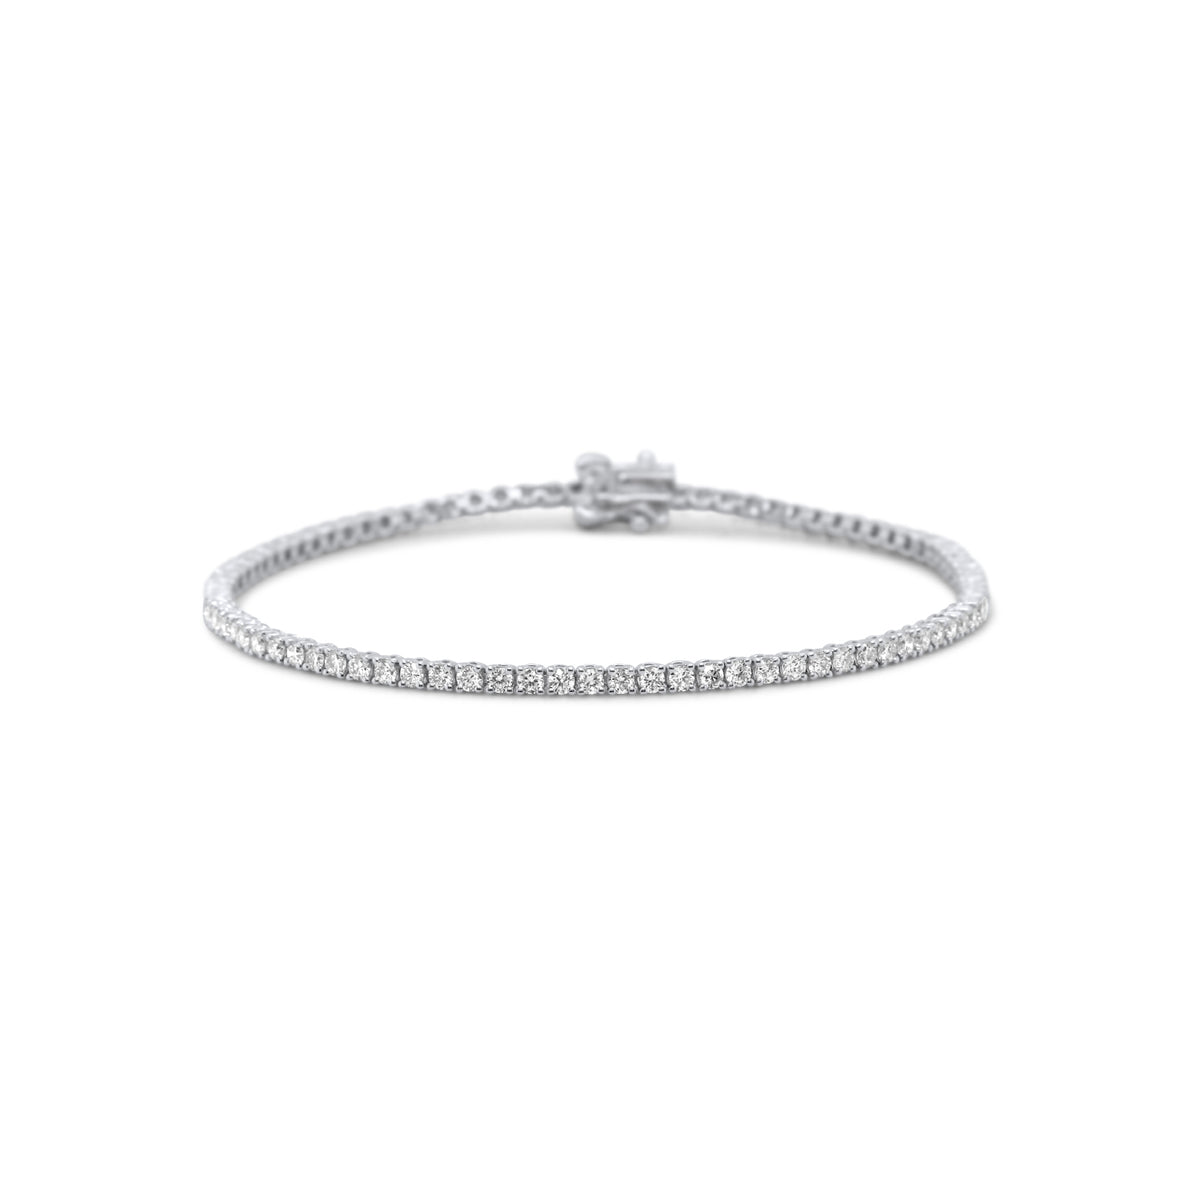 14k white gold lab grown diamond tennis bracelet with safety clasp